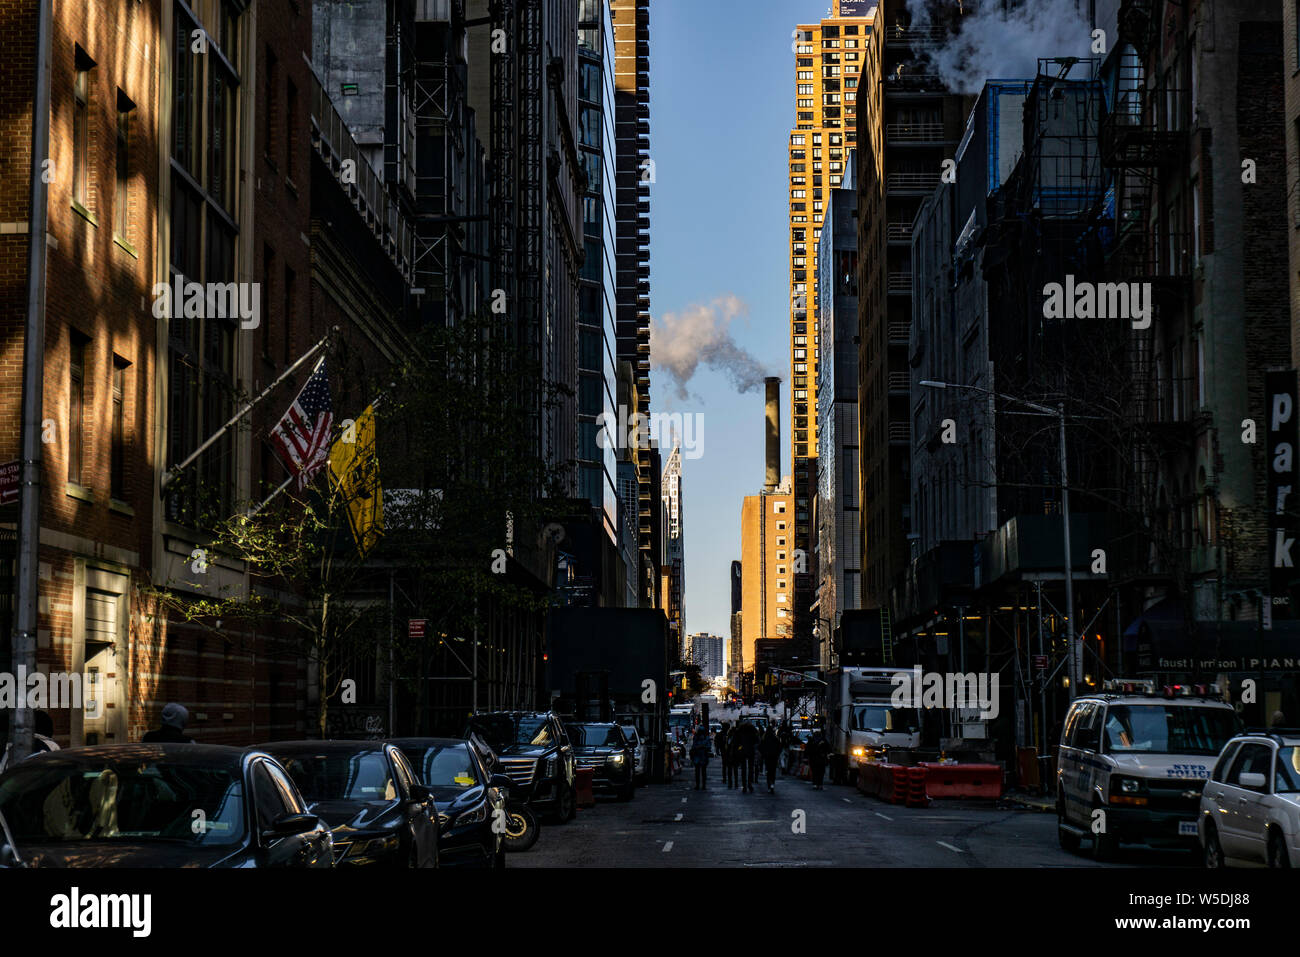 New York, USA - NOVEMBER 2018: Manhattan street with smoke and work in progress Stock Photo